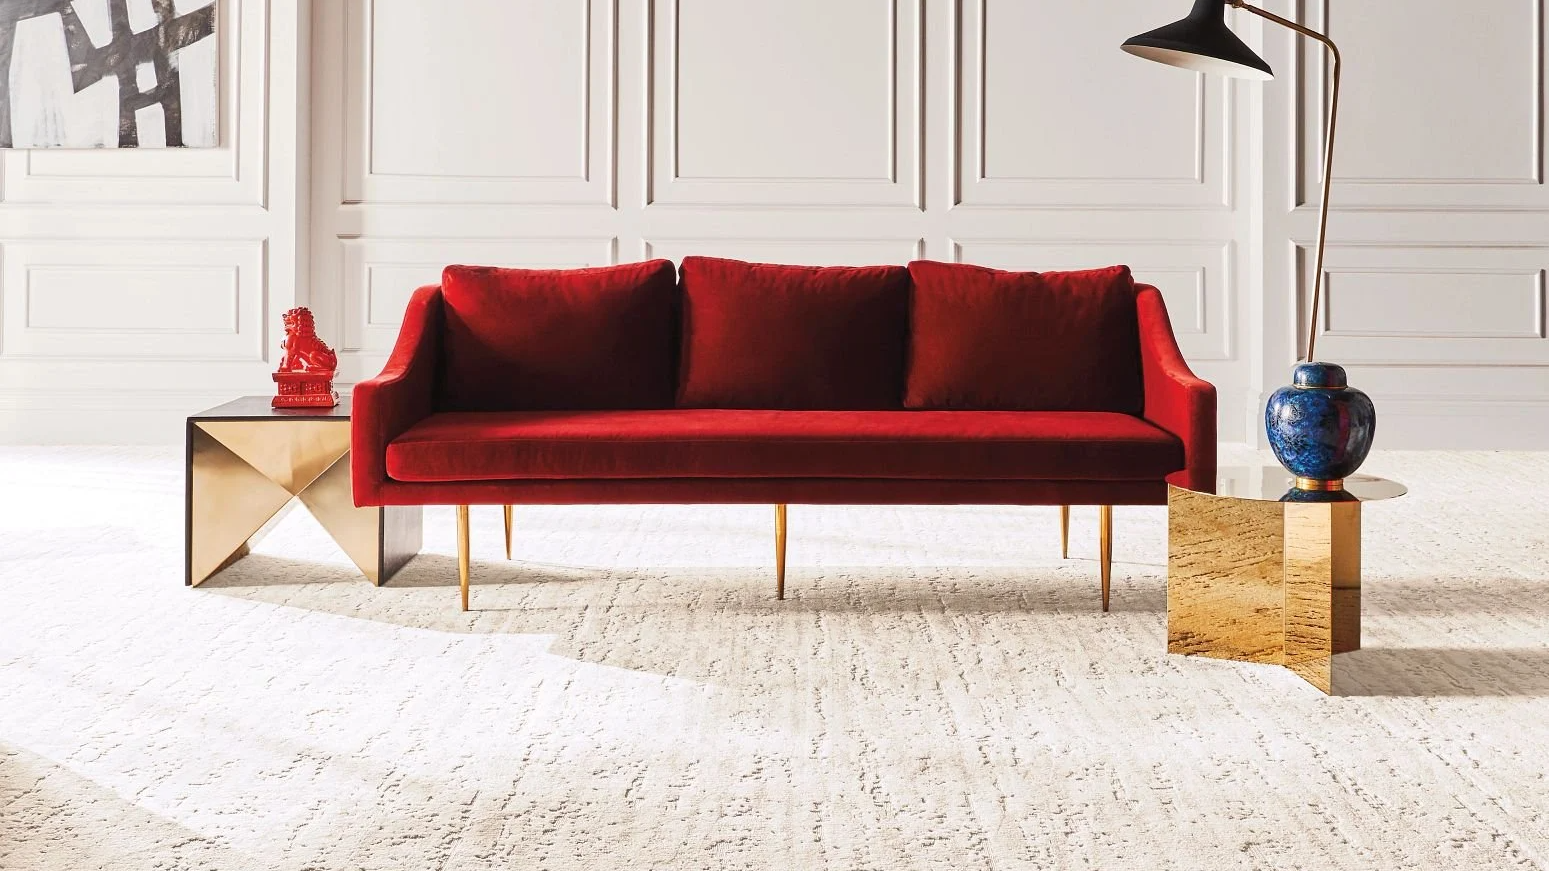 Red Couch on Nylon Carpet from Horrigan Flooring Center in Westminster